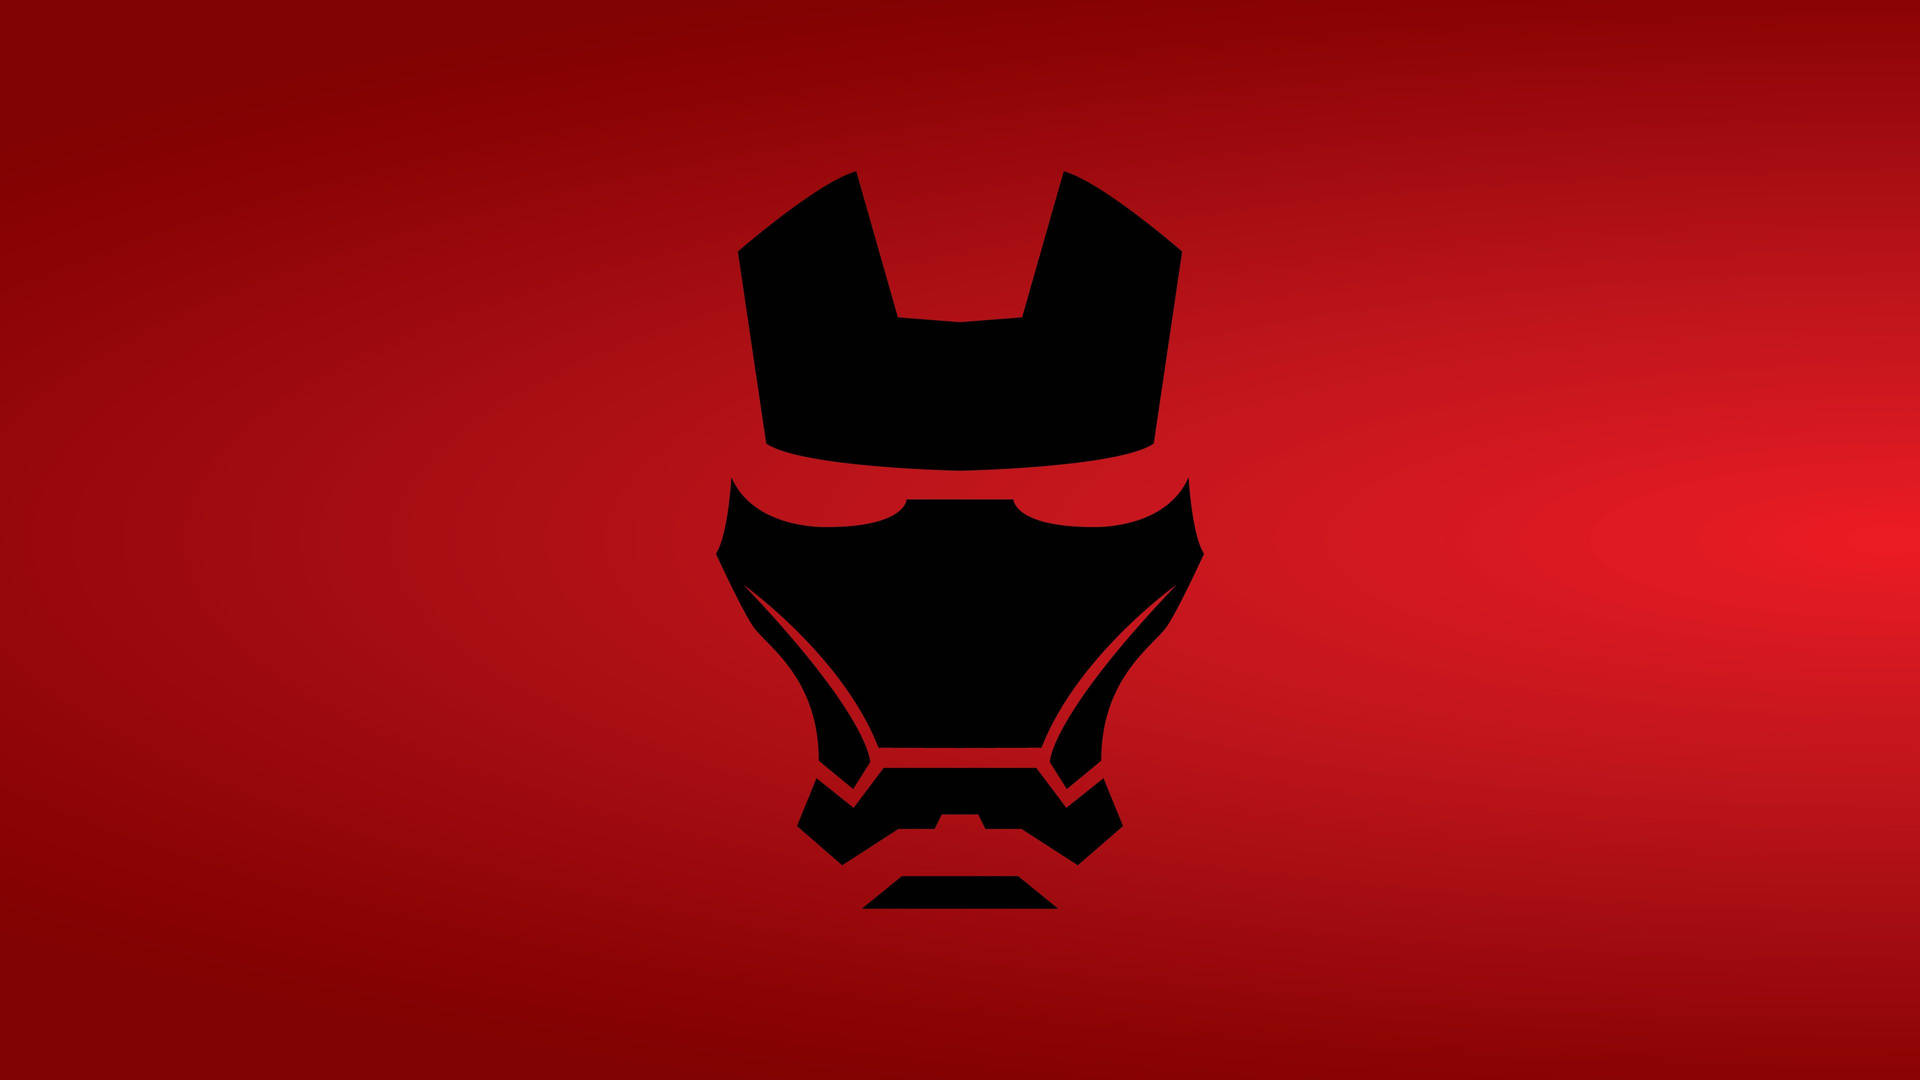 Abstract Iron Man Logo Wallpaper